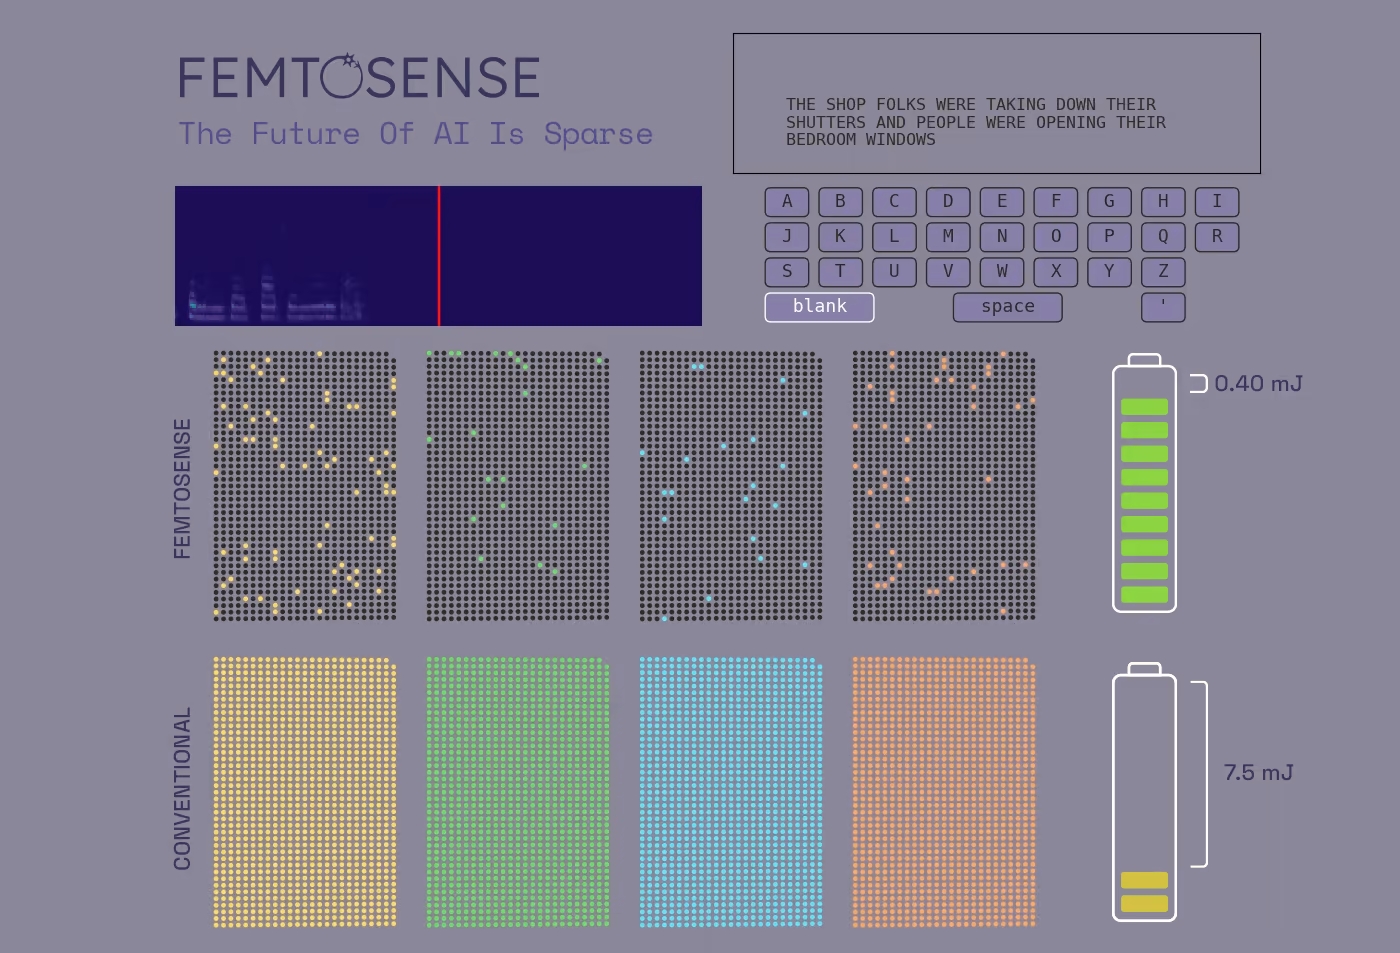 Femtosense raises capital to power the AI inside of consumer electronics